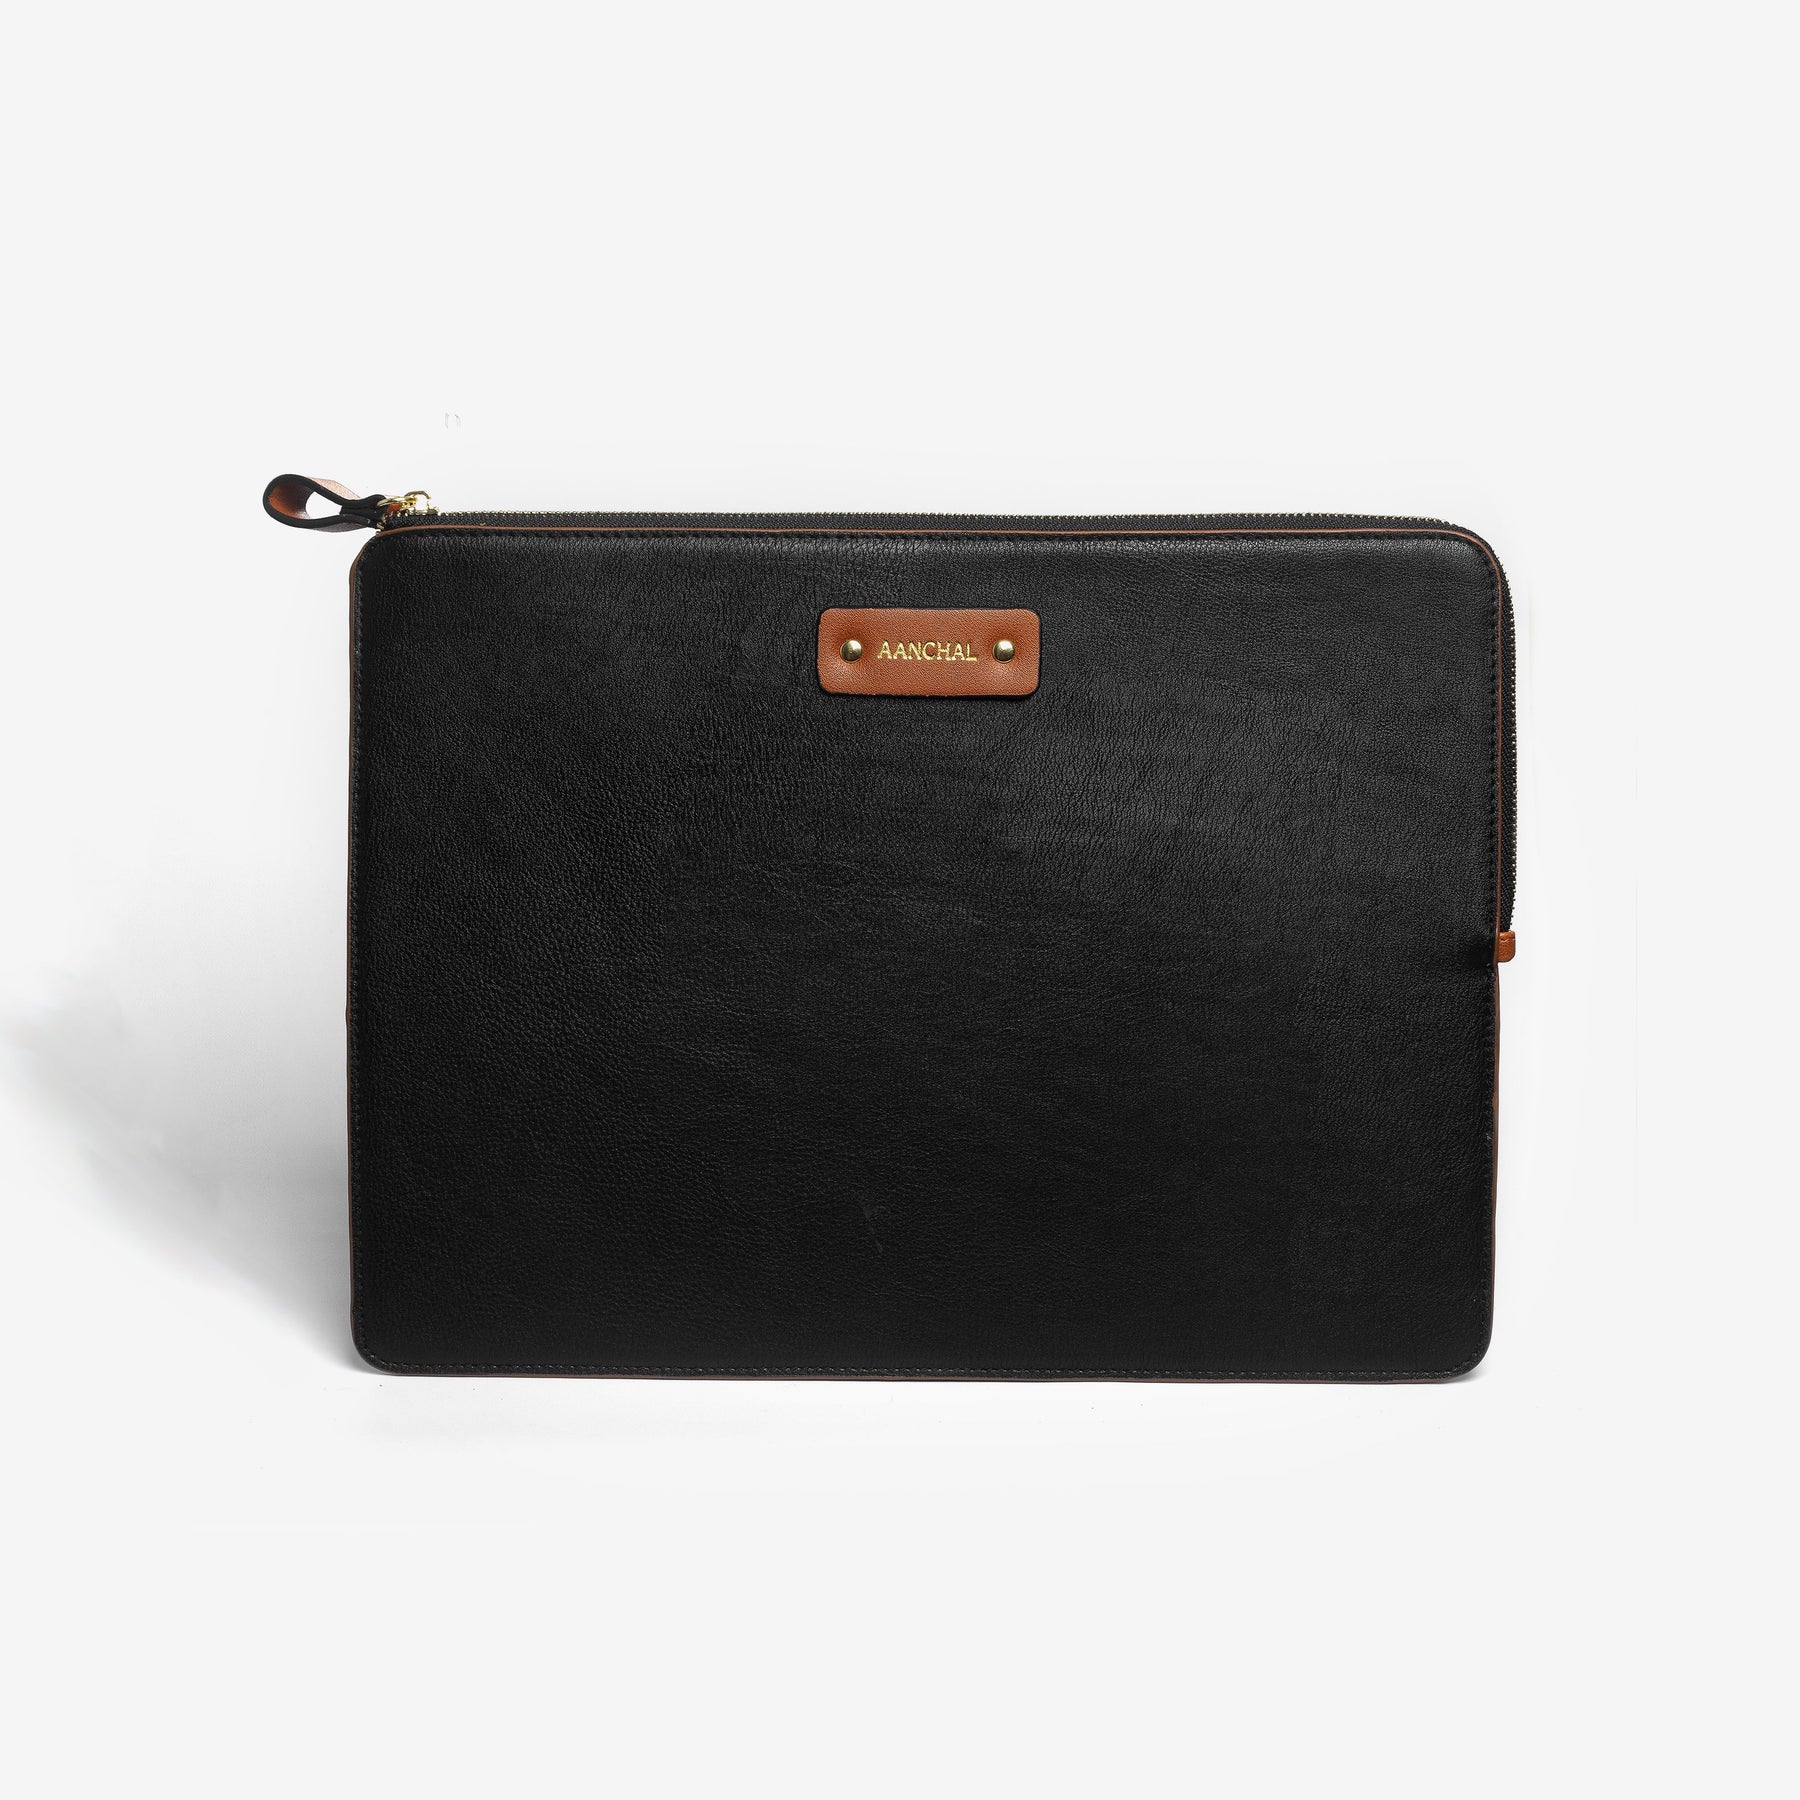 Personalized Vegan Leather iPad Sleeve - Classic Black